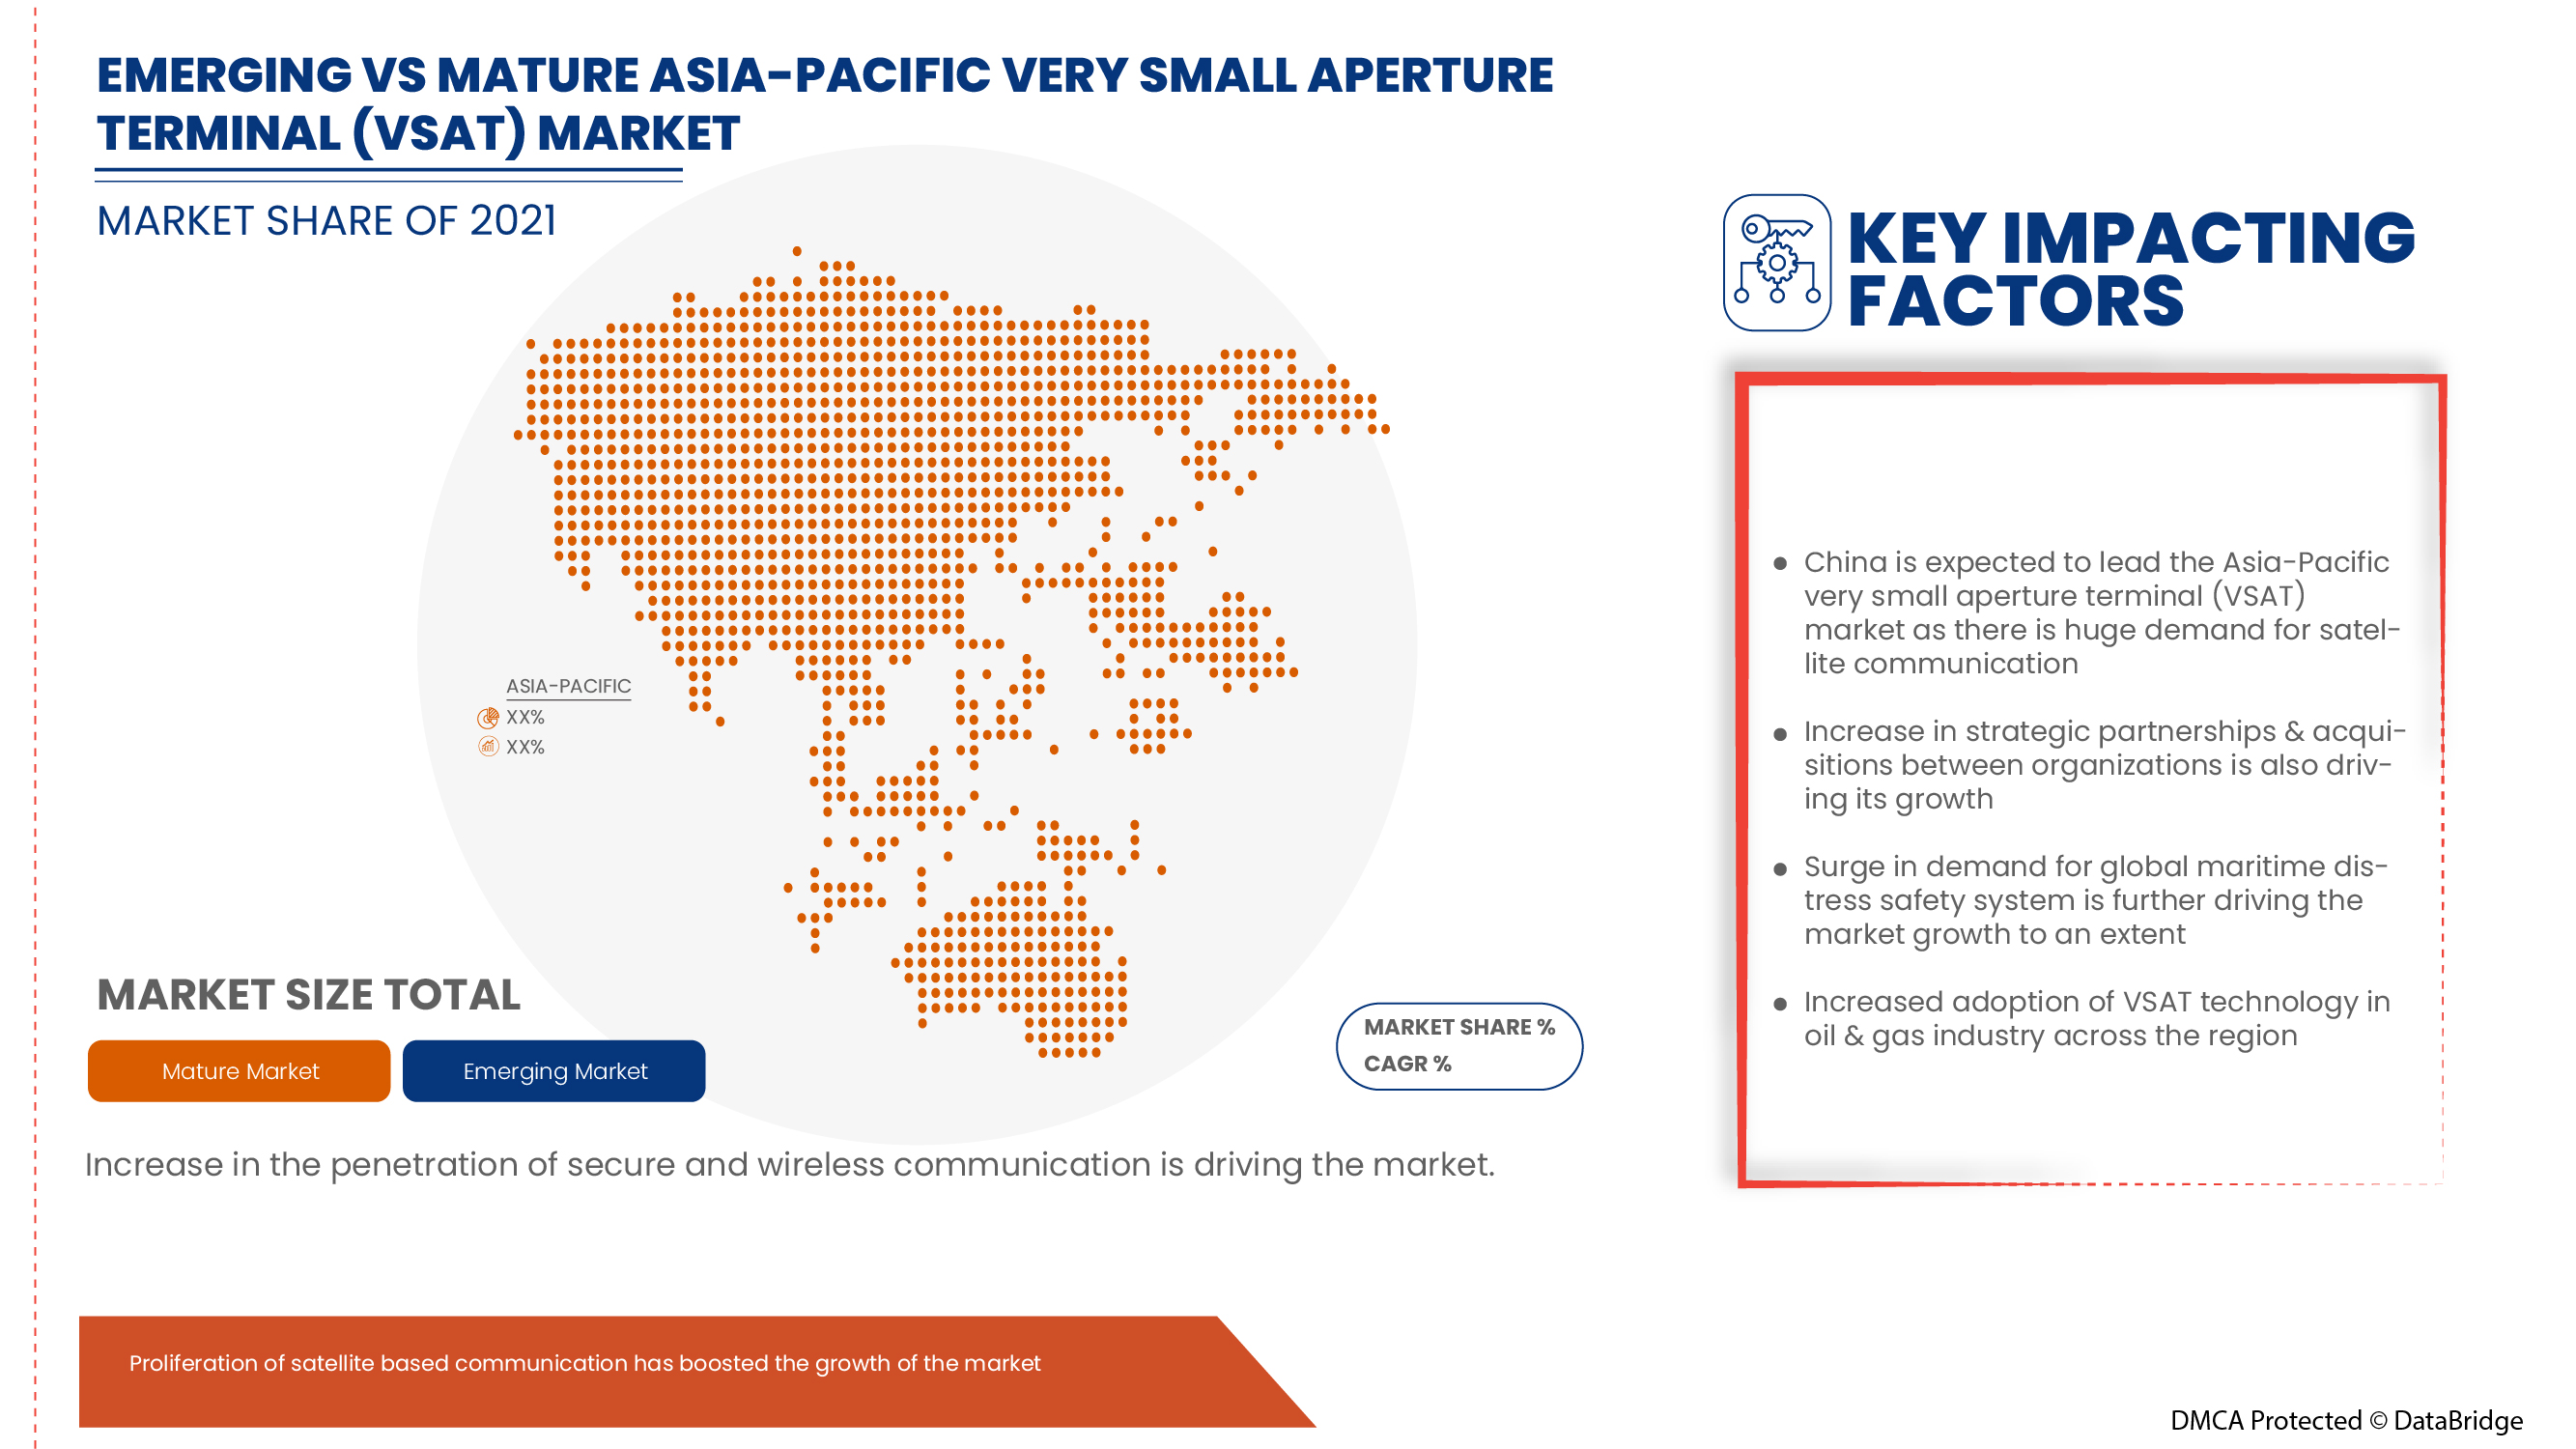 Asia-Pacific Very Small Aperture Terminal (VSAT) Market